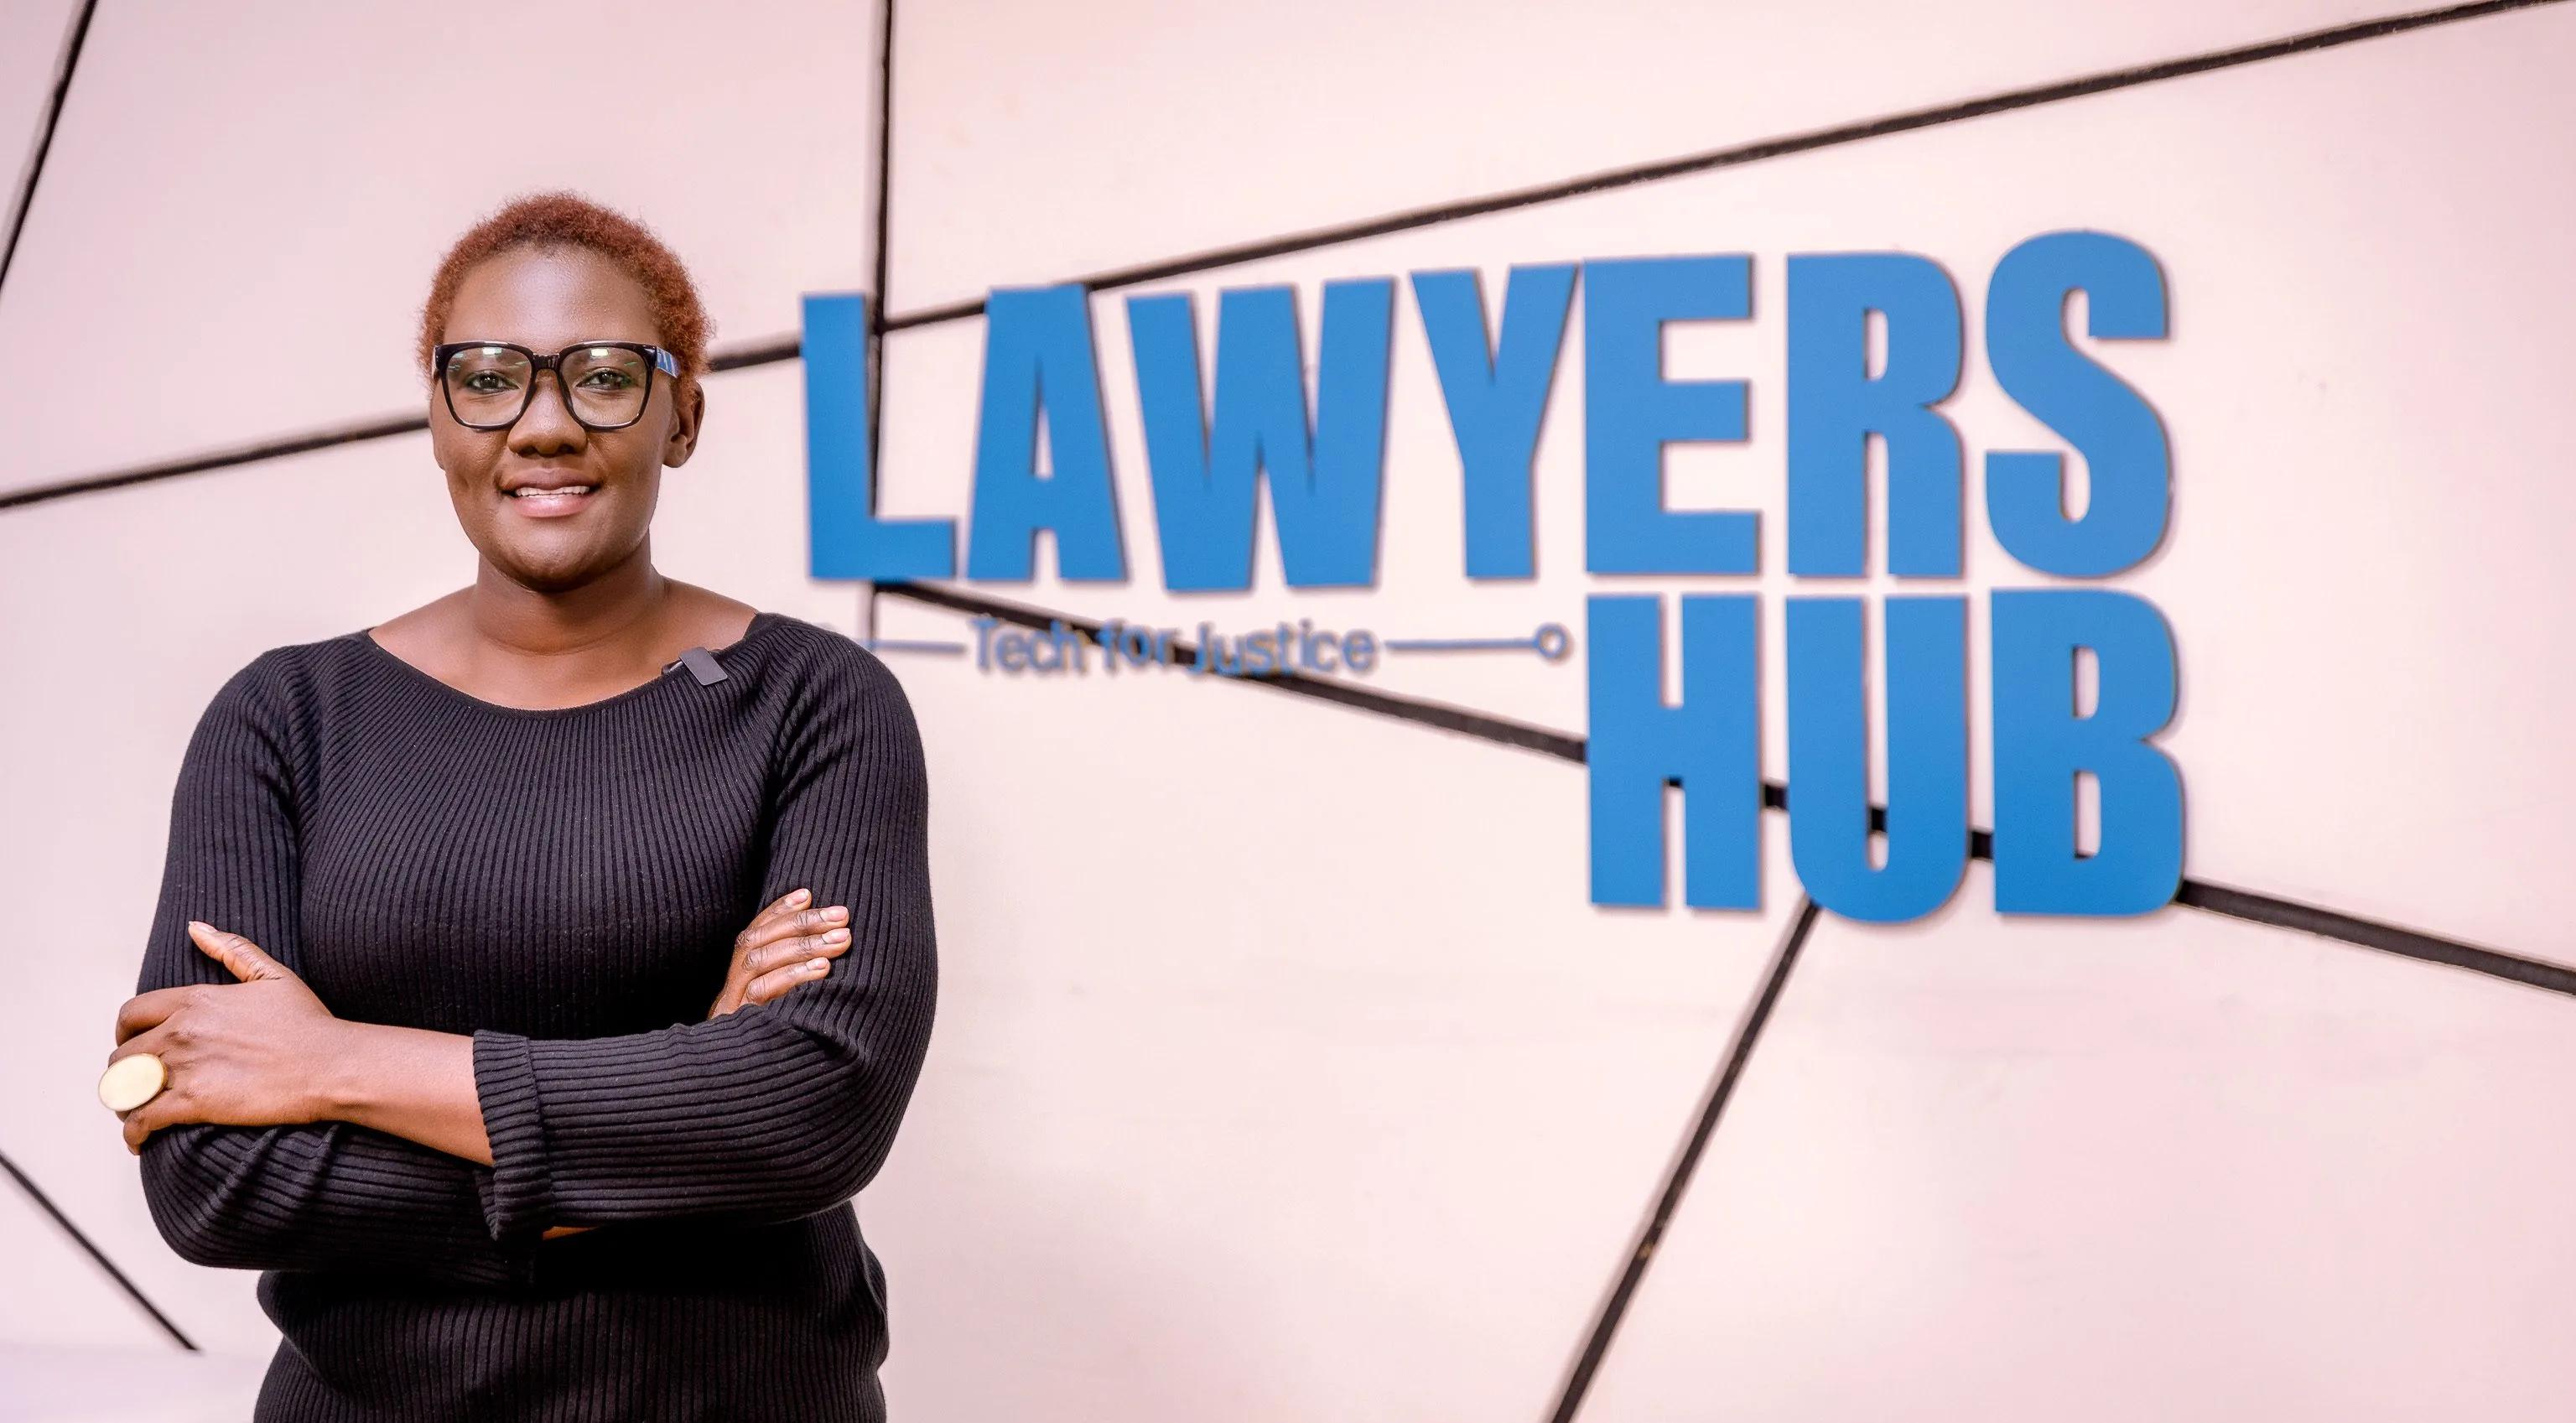 Kenya’s Lawyers Hub gains traction helping startups meet regulatory compliance 🇰🇪 ⚖️ 🚀